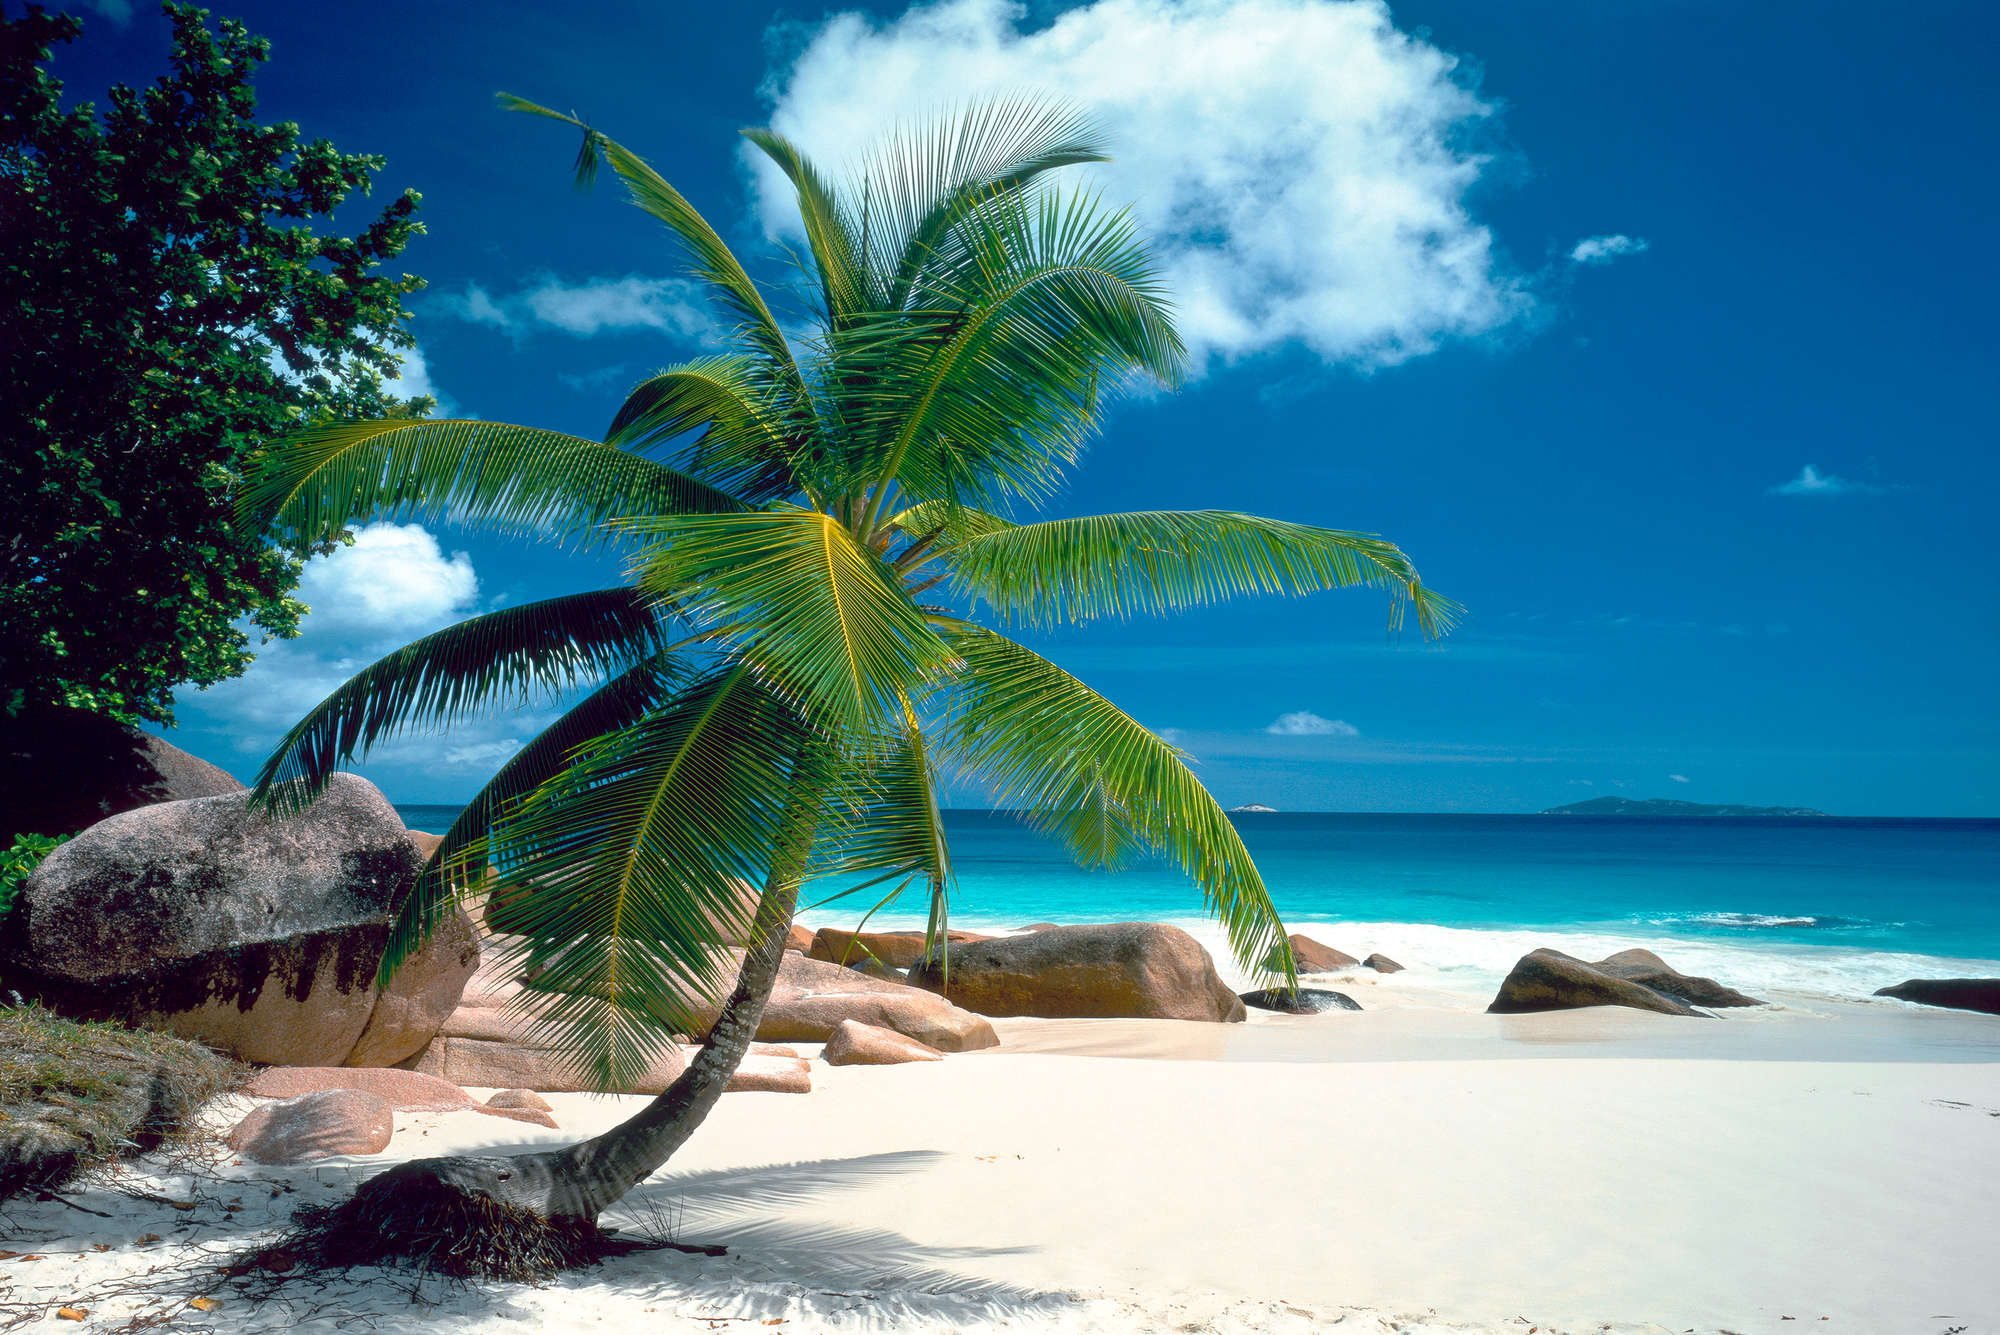             Carta da parati Beach Palm Tree con mare blu su tessuto liscio opaco
        